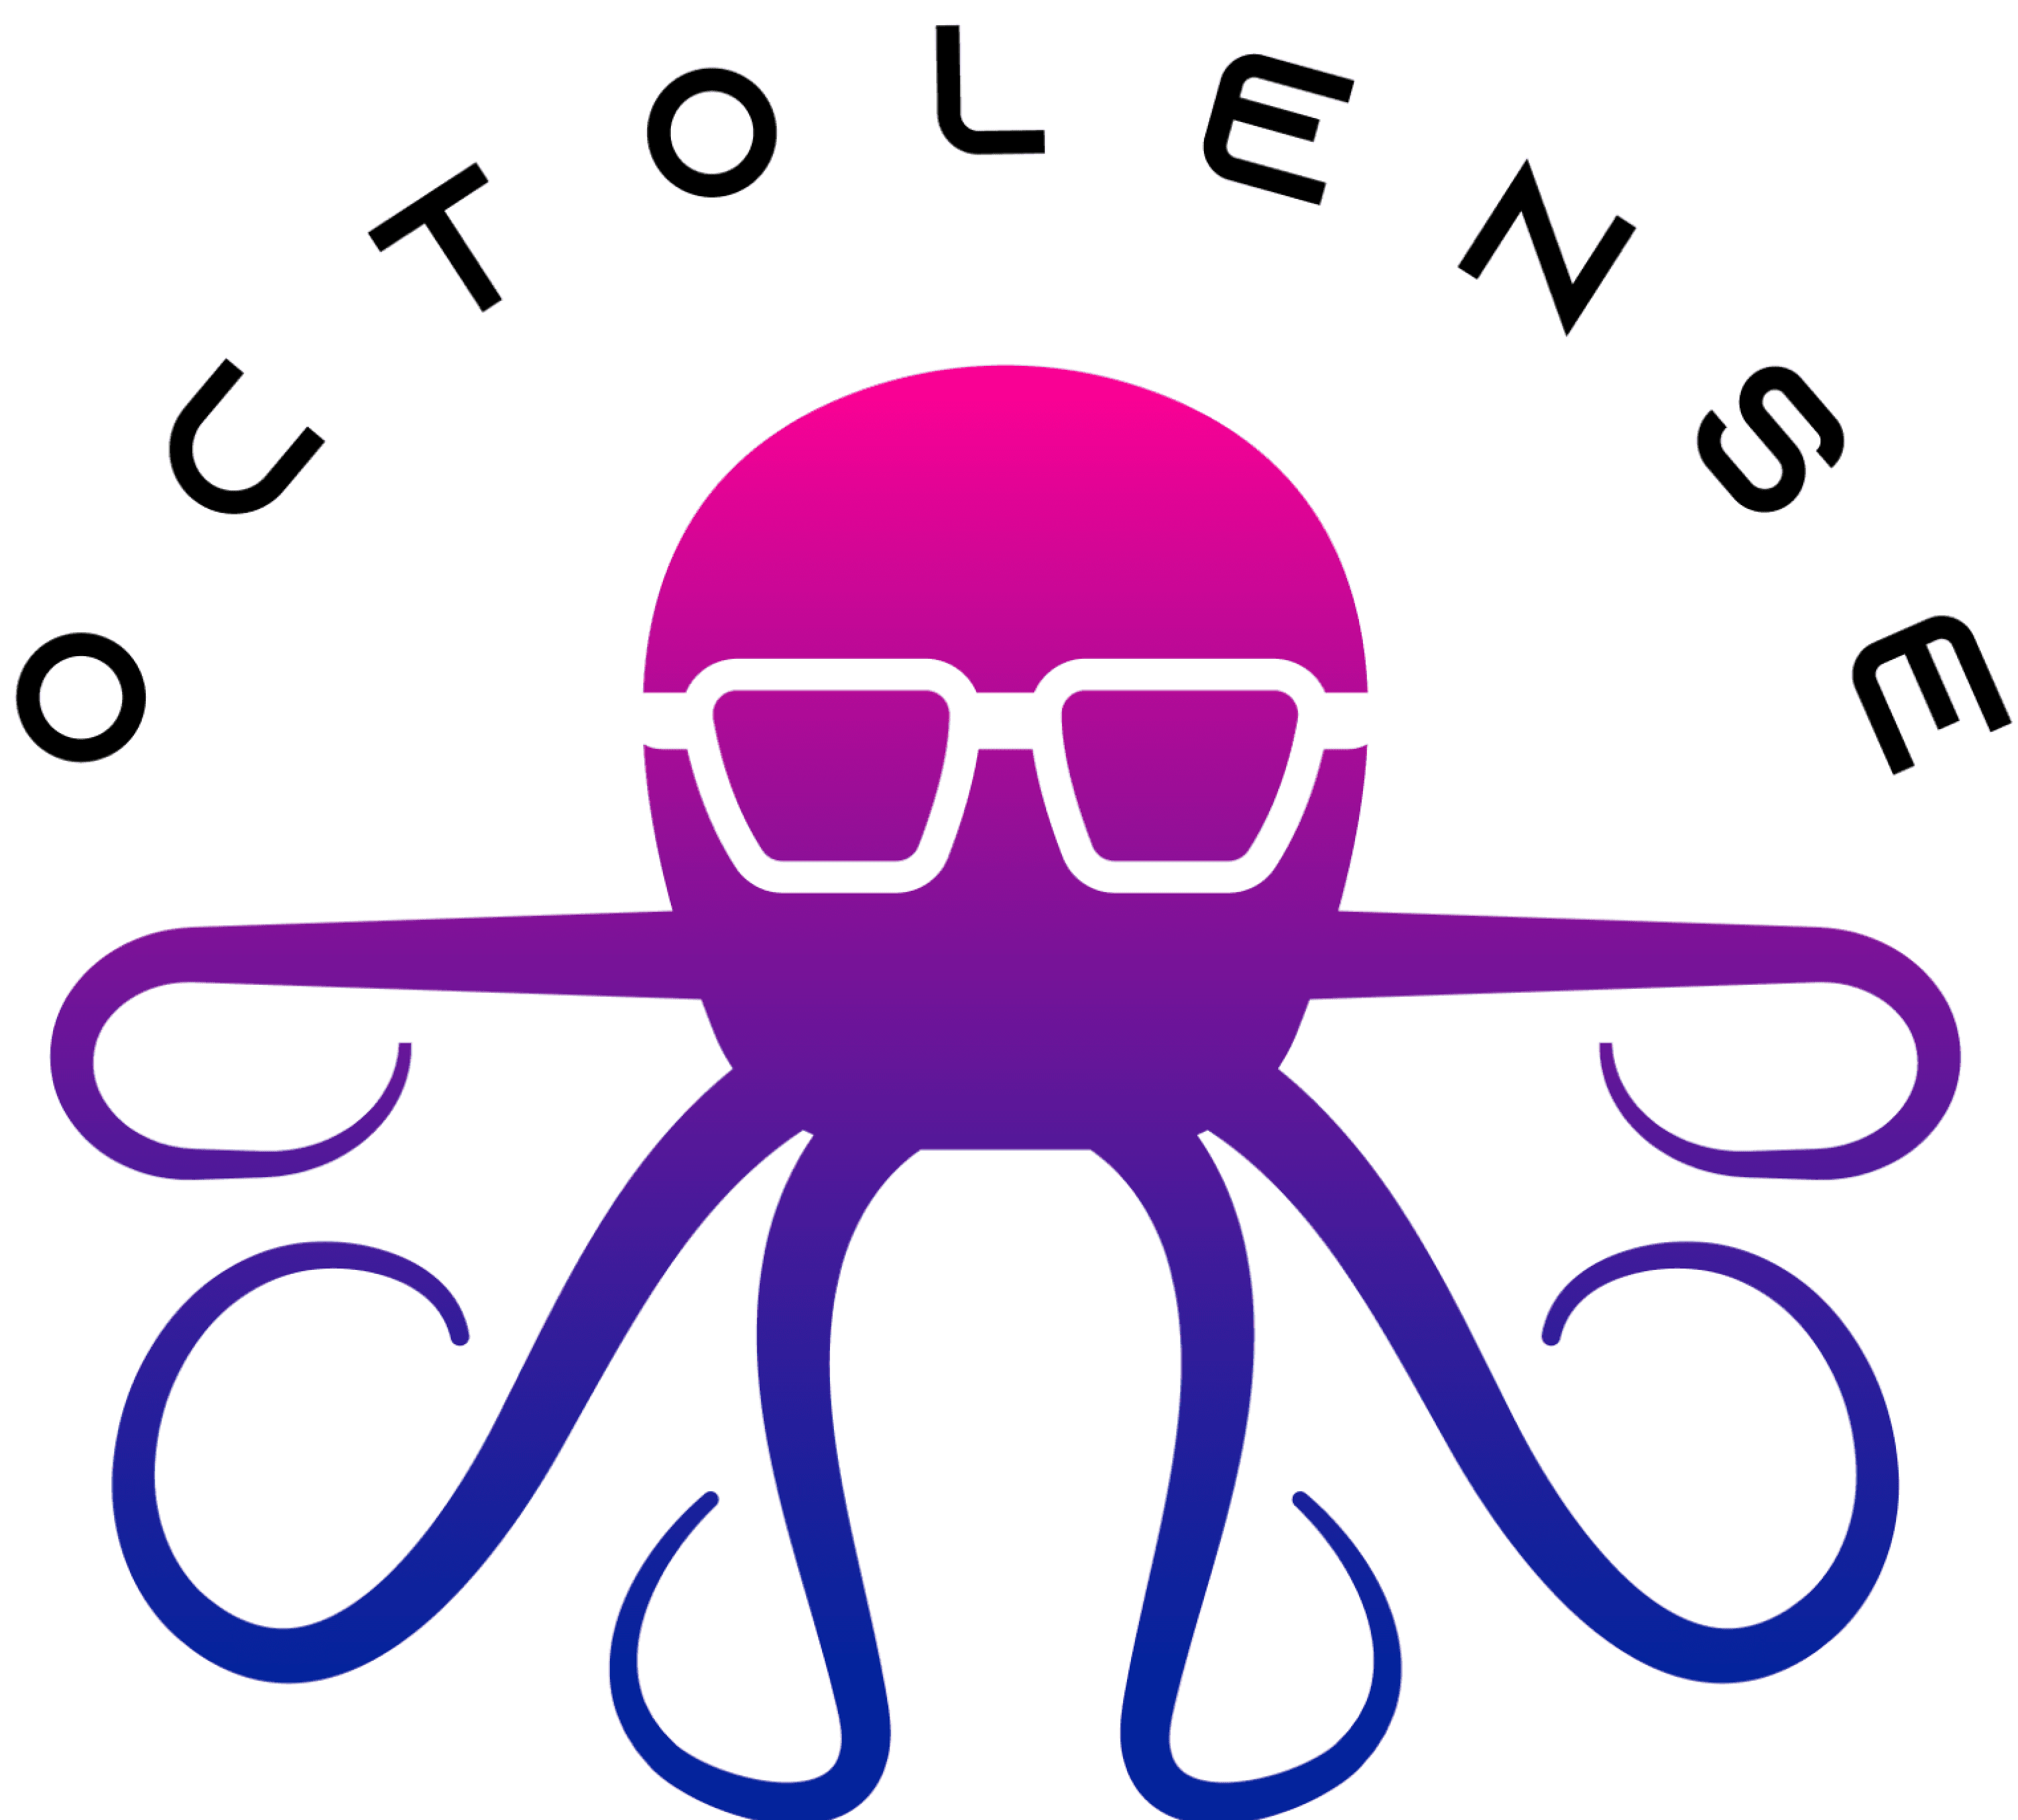 Octolense Logo